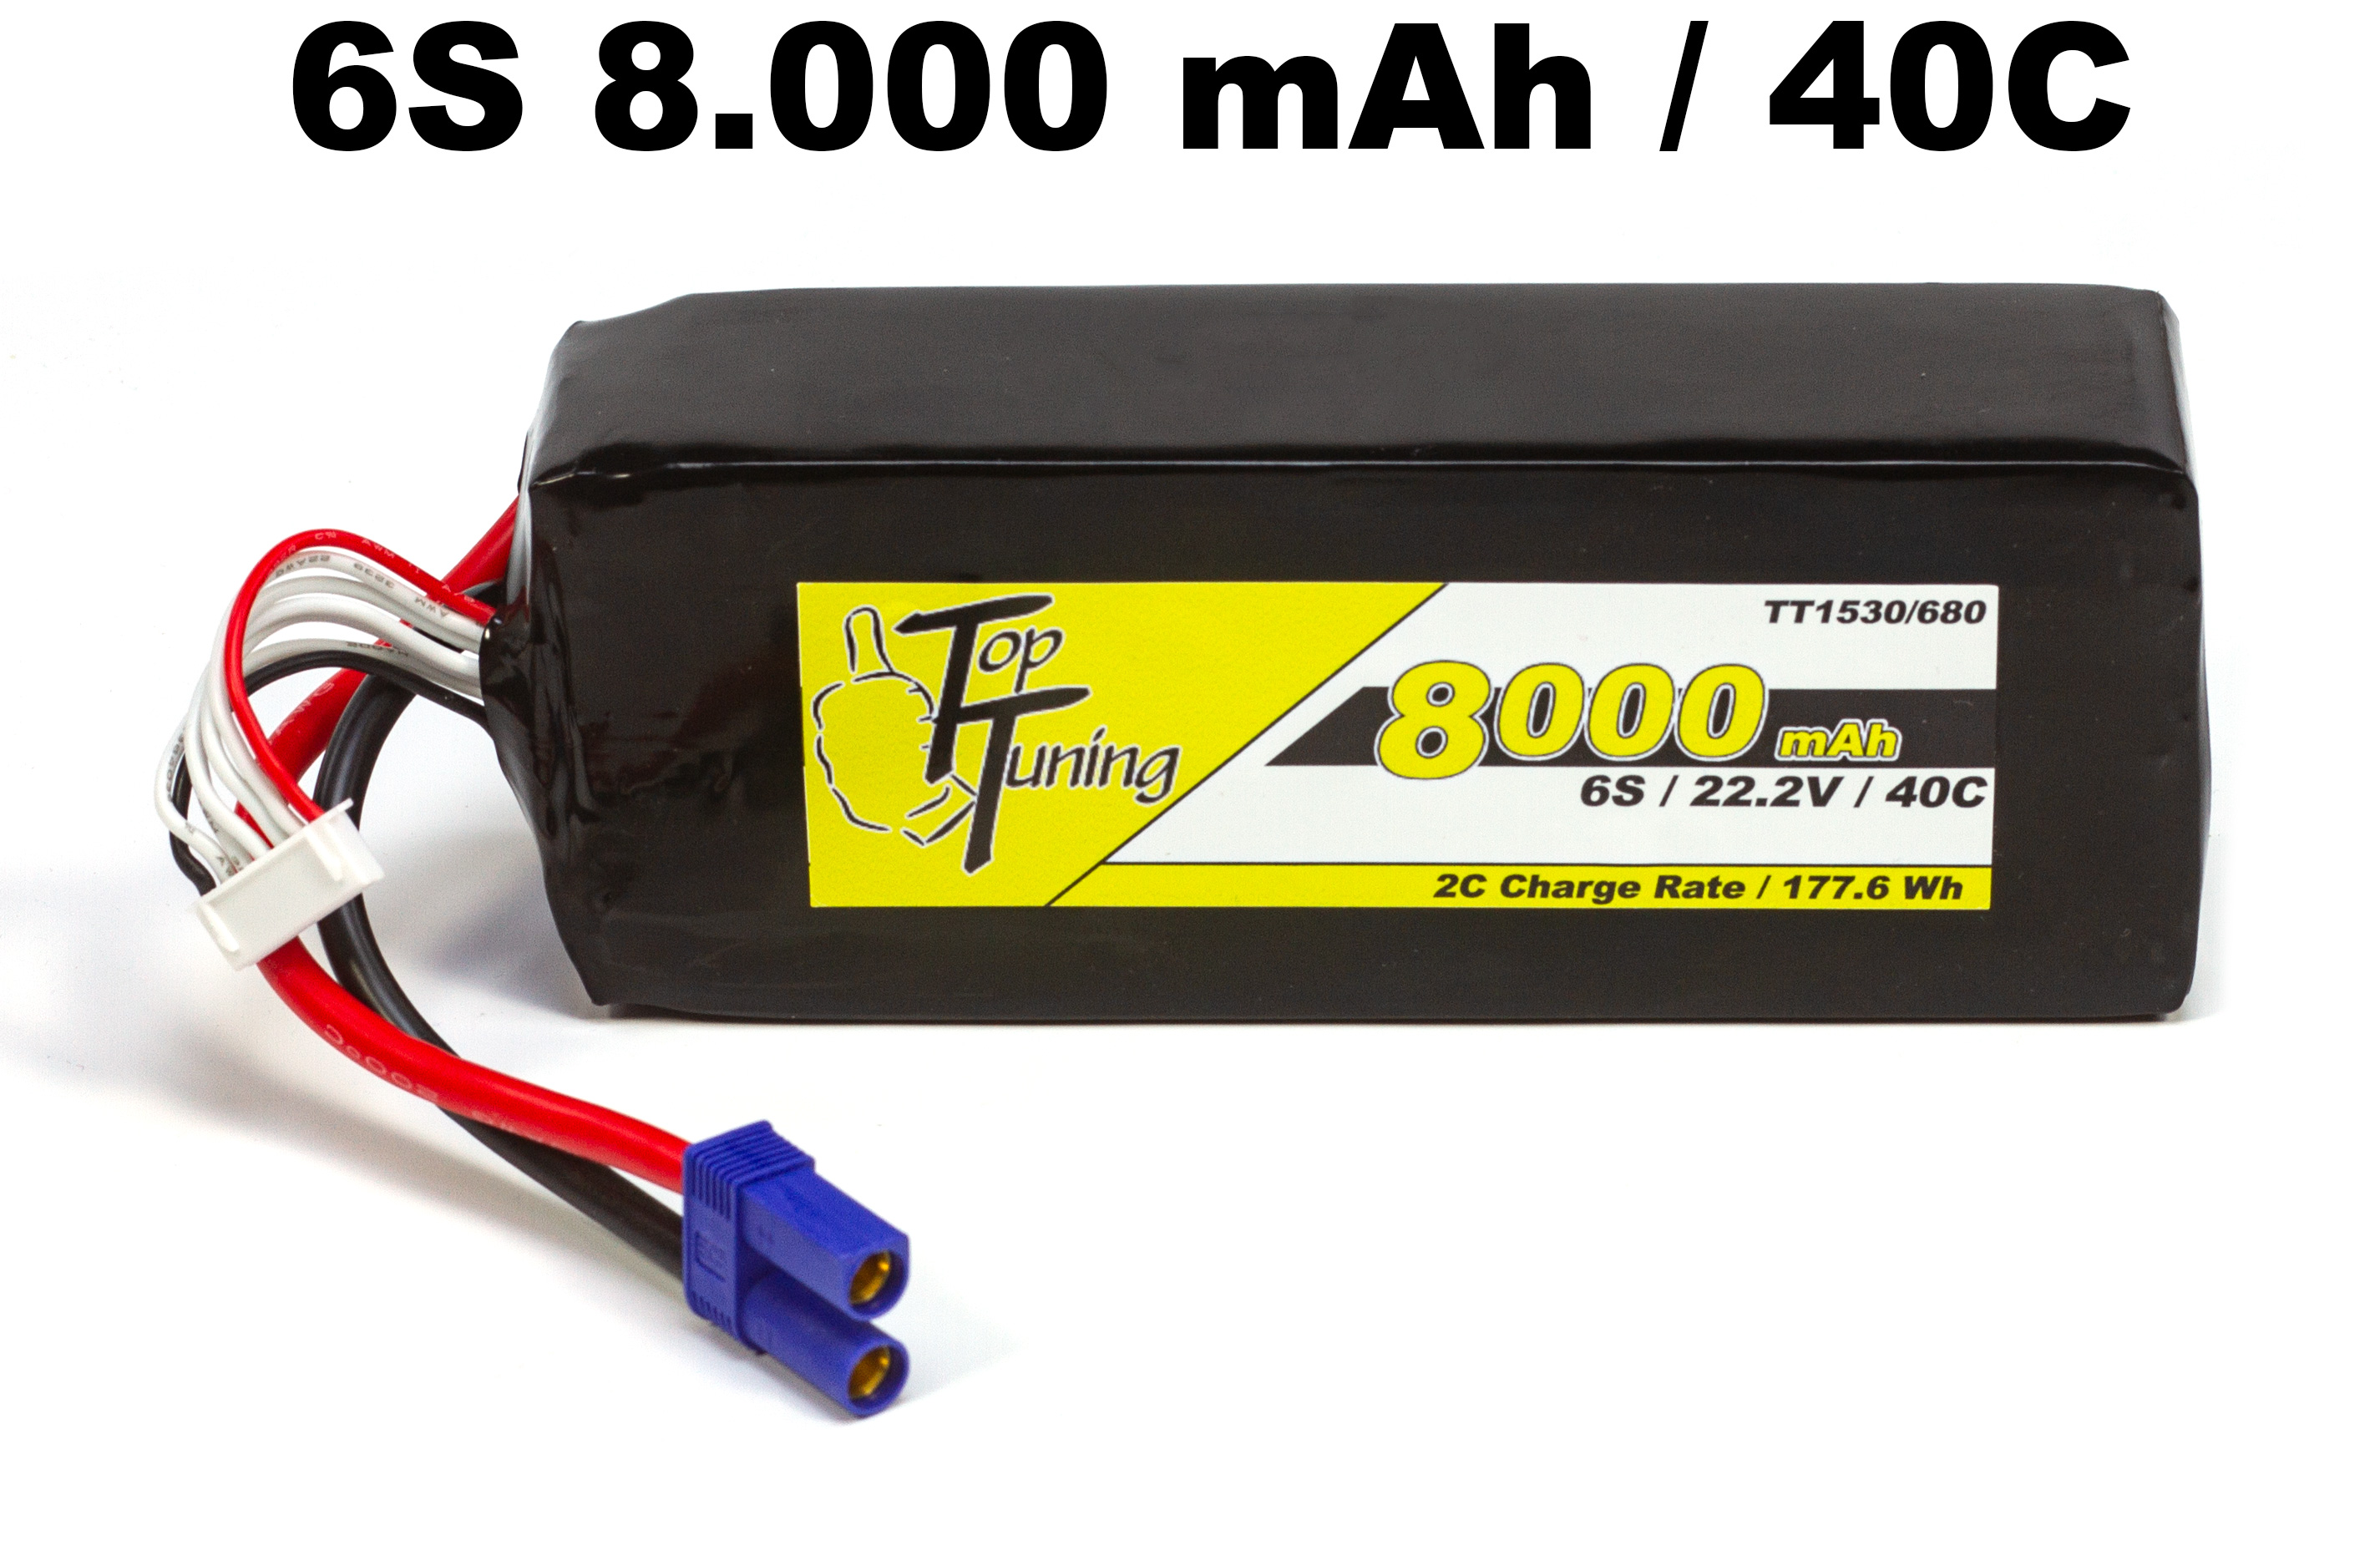 TT1530/680 Top Tuning 8000 mAh LiPo battery 6S, 22.2V 40C